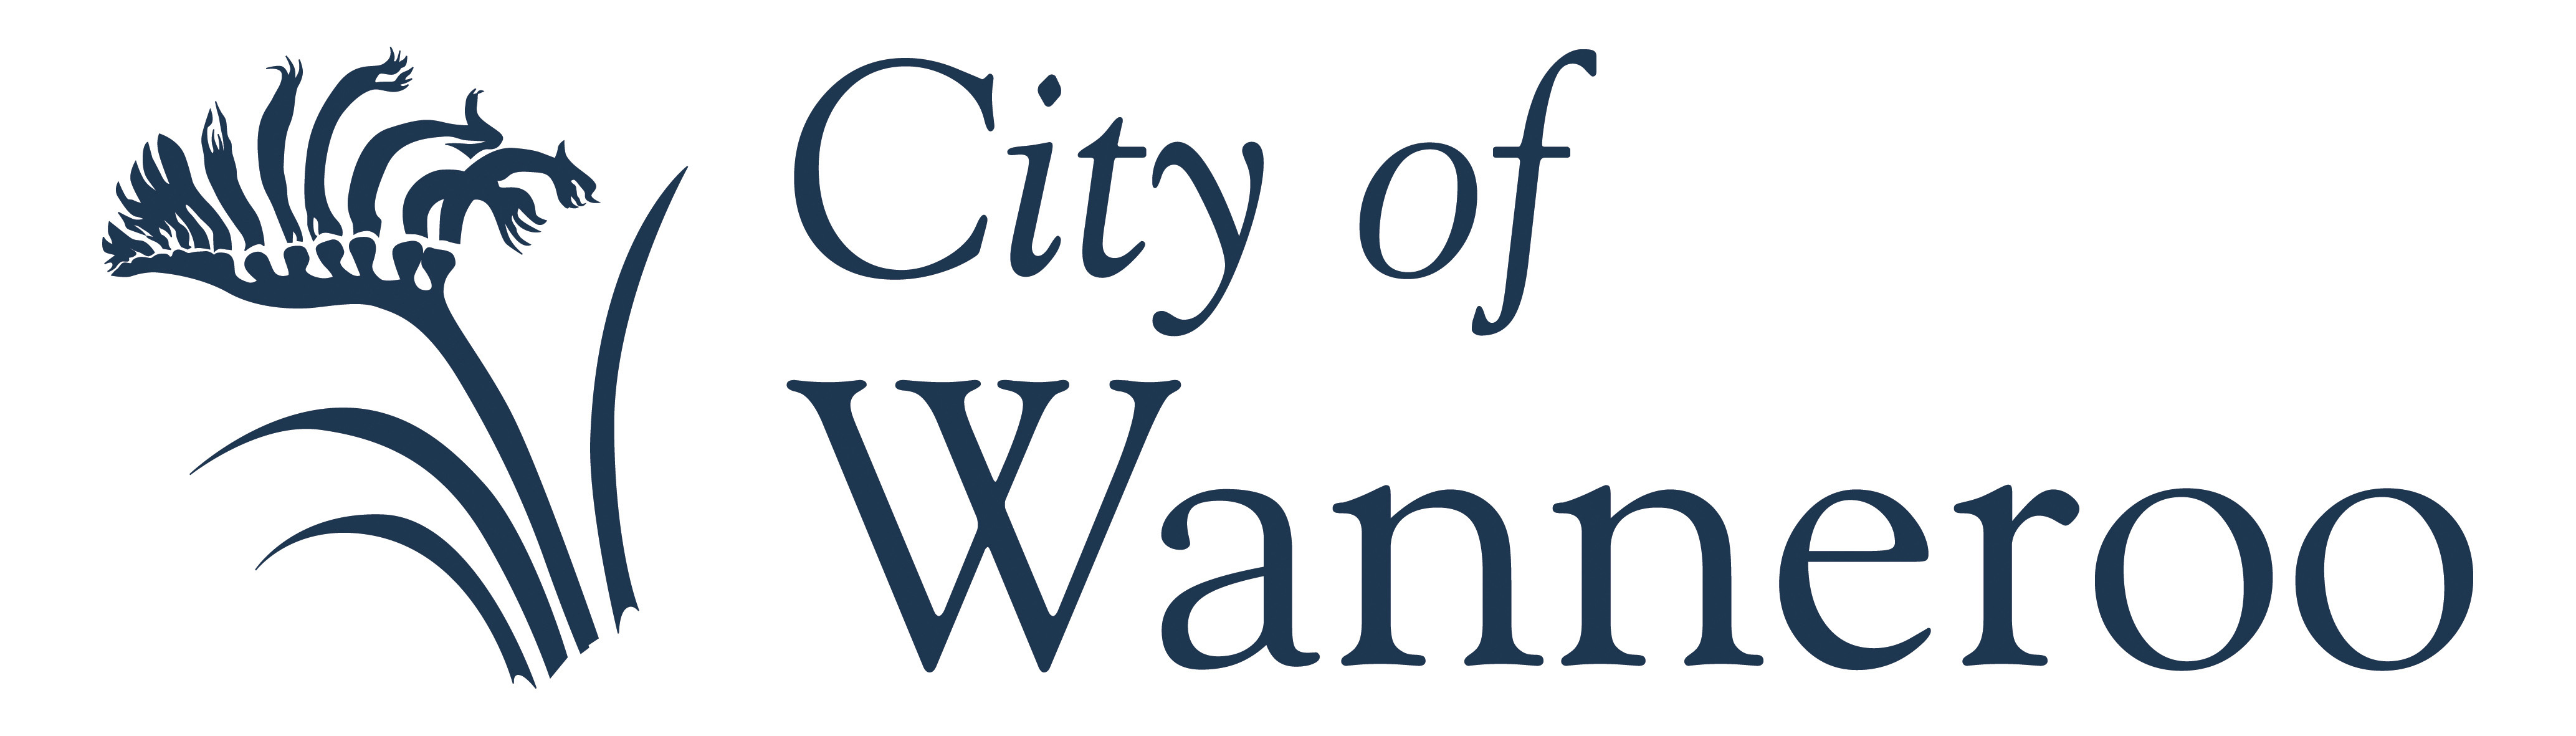 city-of-wanneroo1